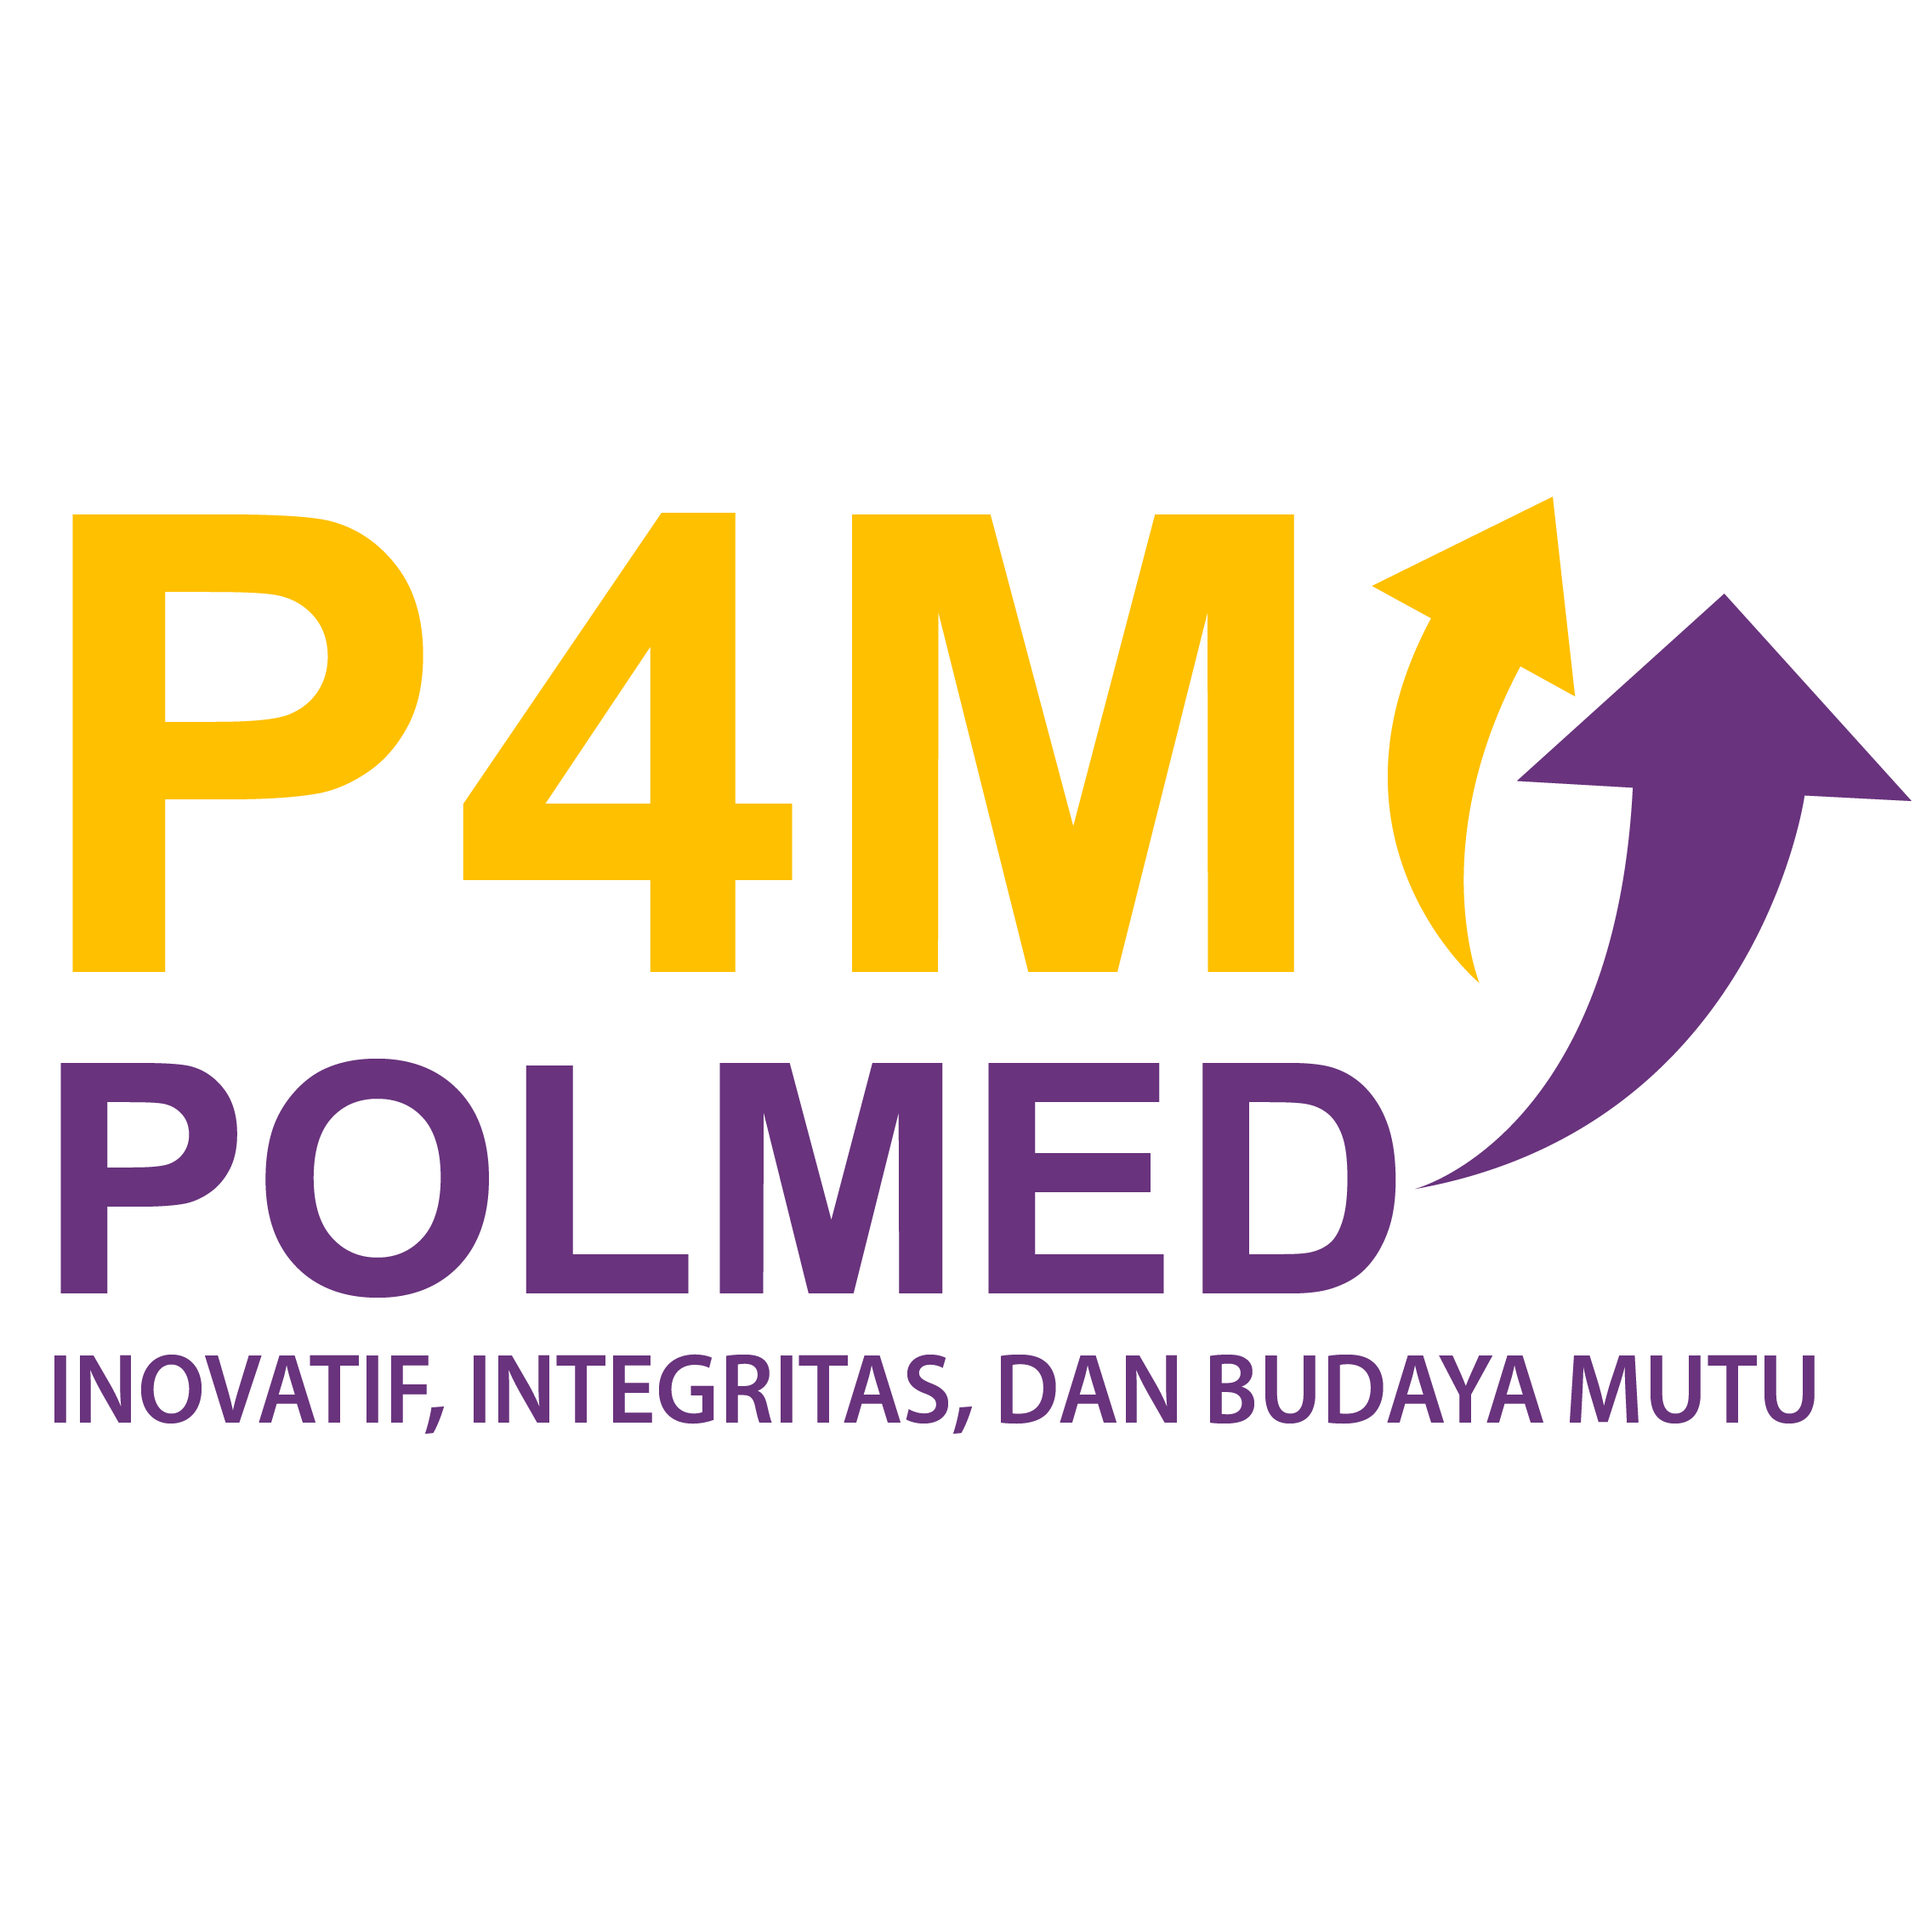 Politeknik Negeri Medan